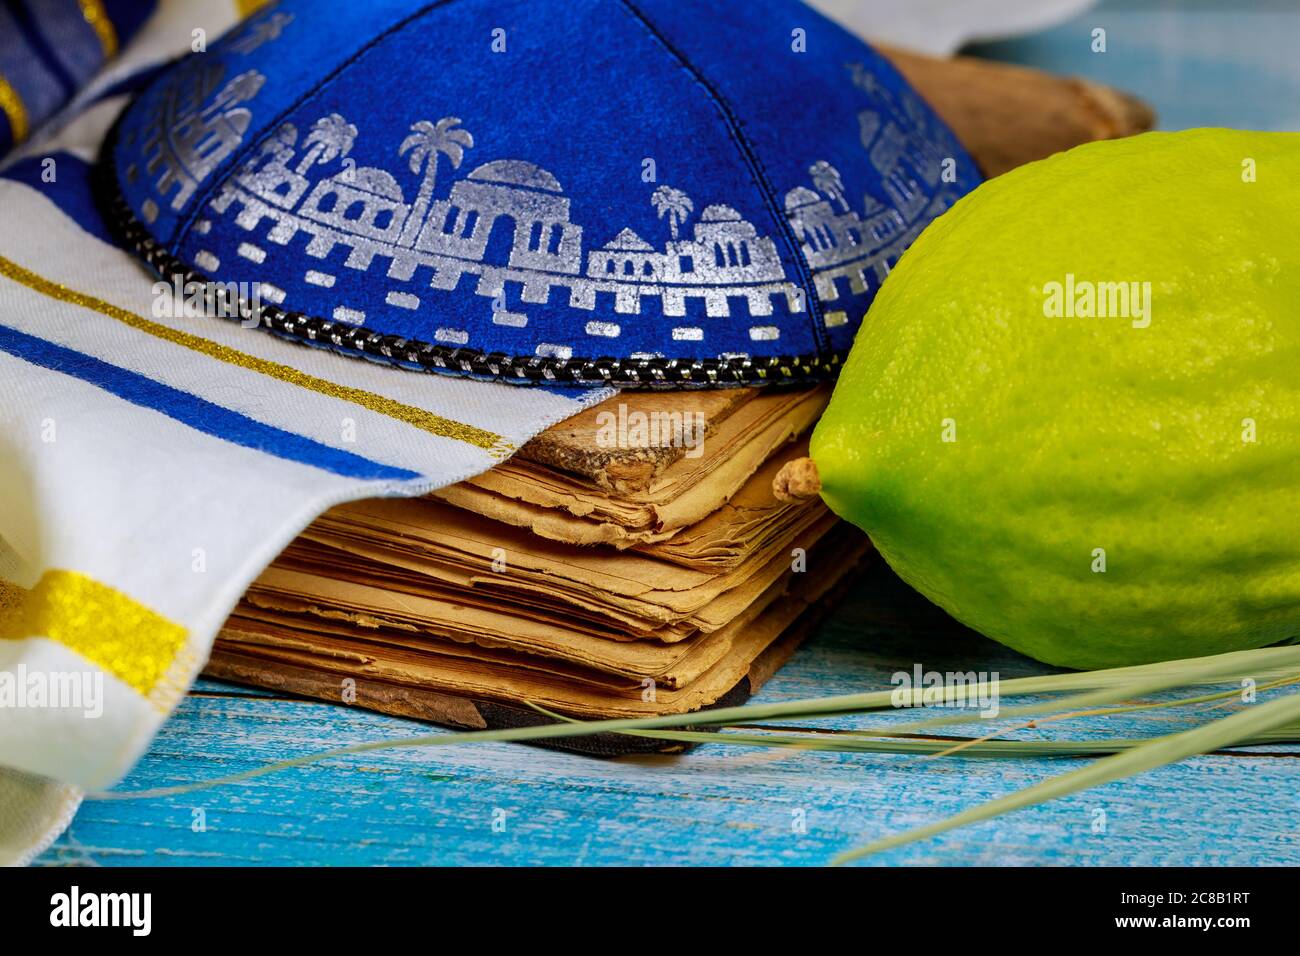 Jewish religious symbol festival of Sukkot traditional symbols Etrog, lulav, hadas, arava praying book kippah Tallit Stock Photo